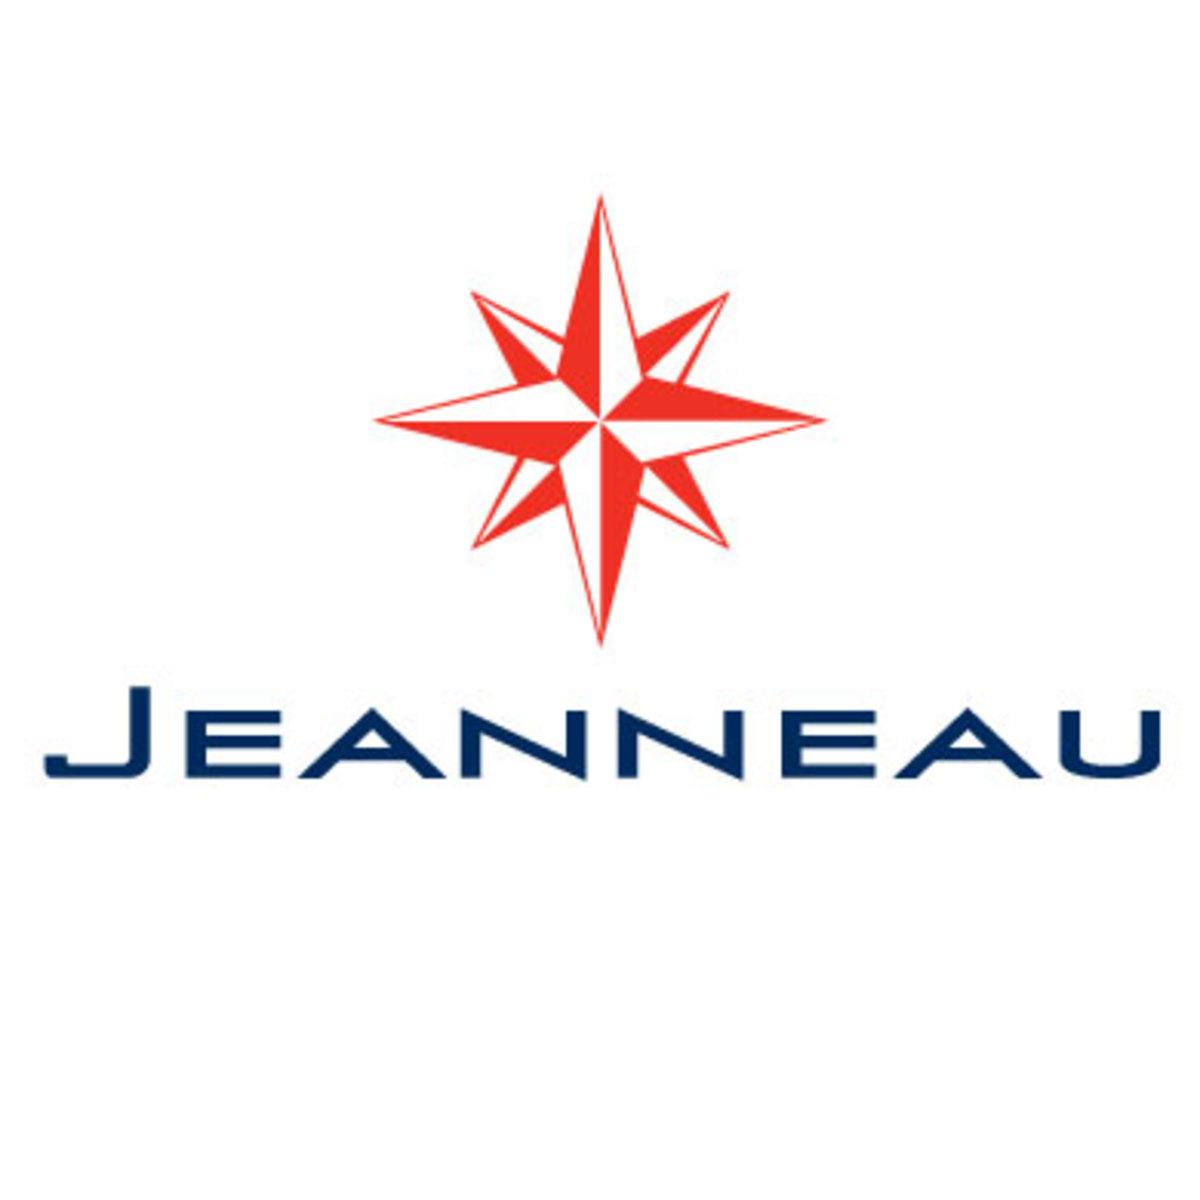 Jeanneau Virtual Boat Show 2021